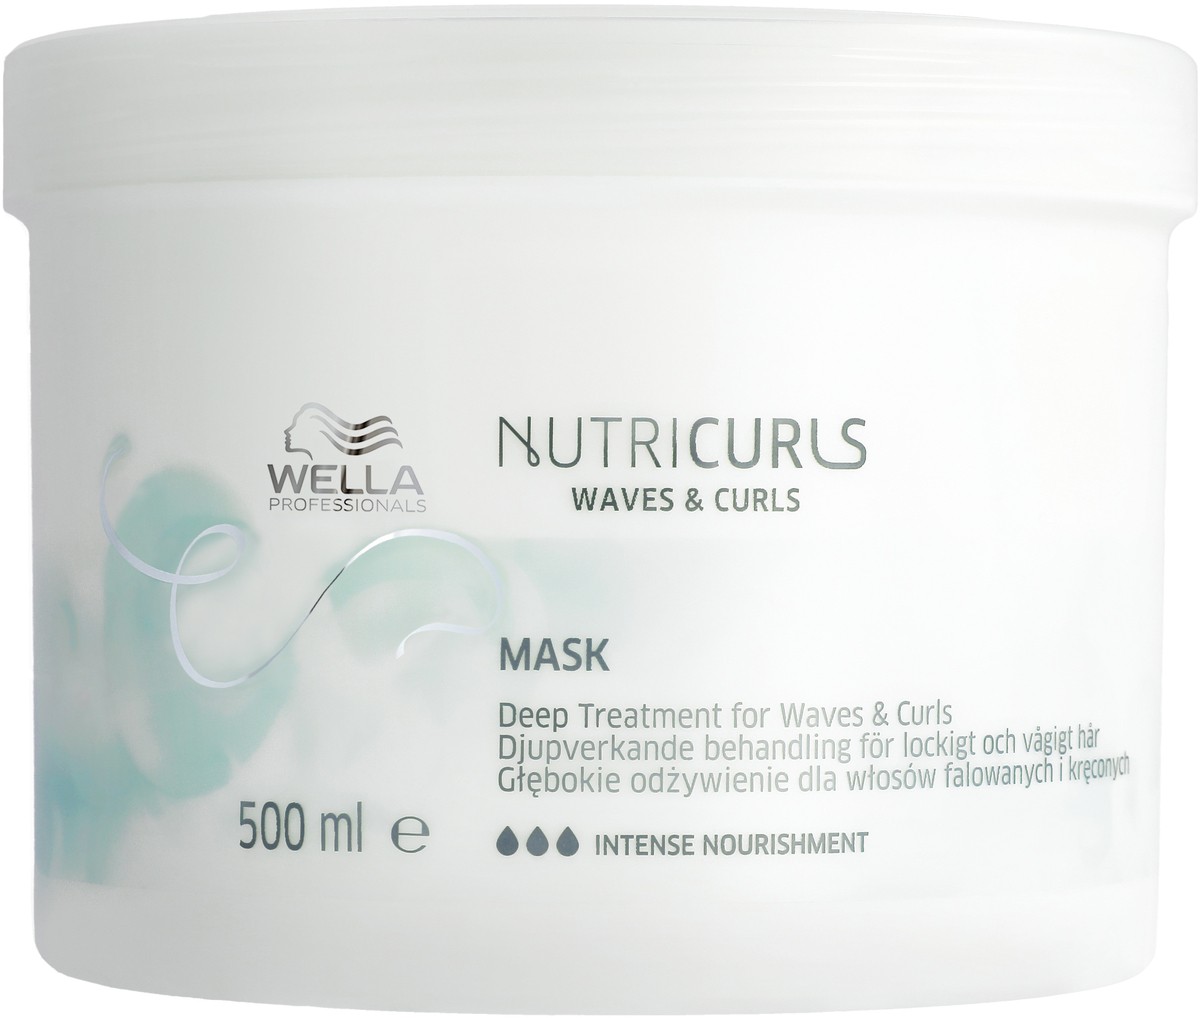  Wella Nutricurls Mask 500 ml 